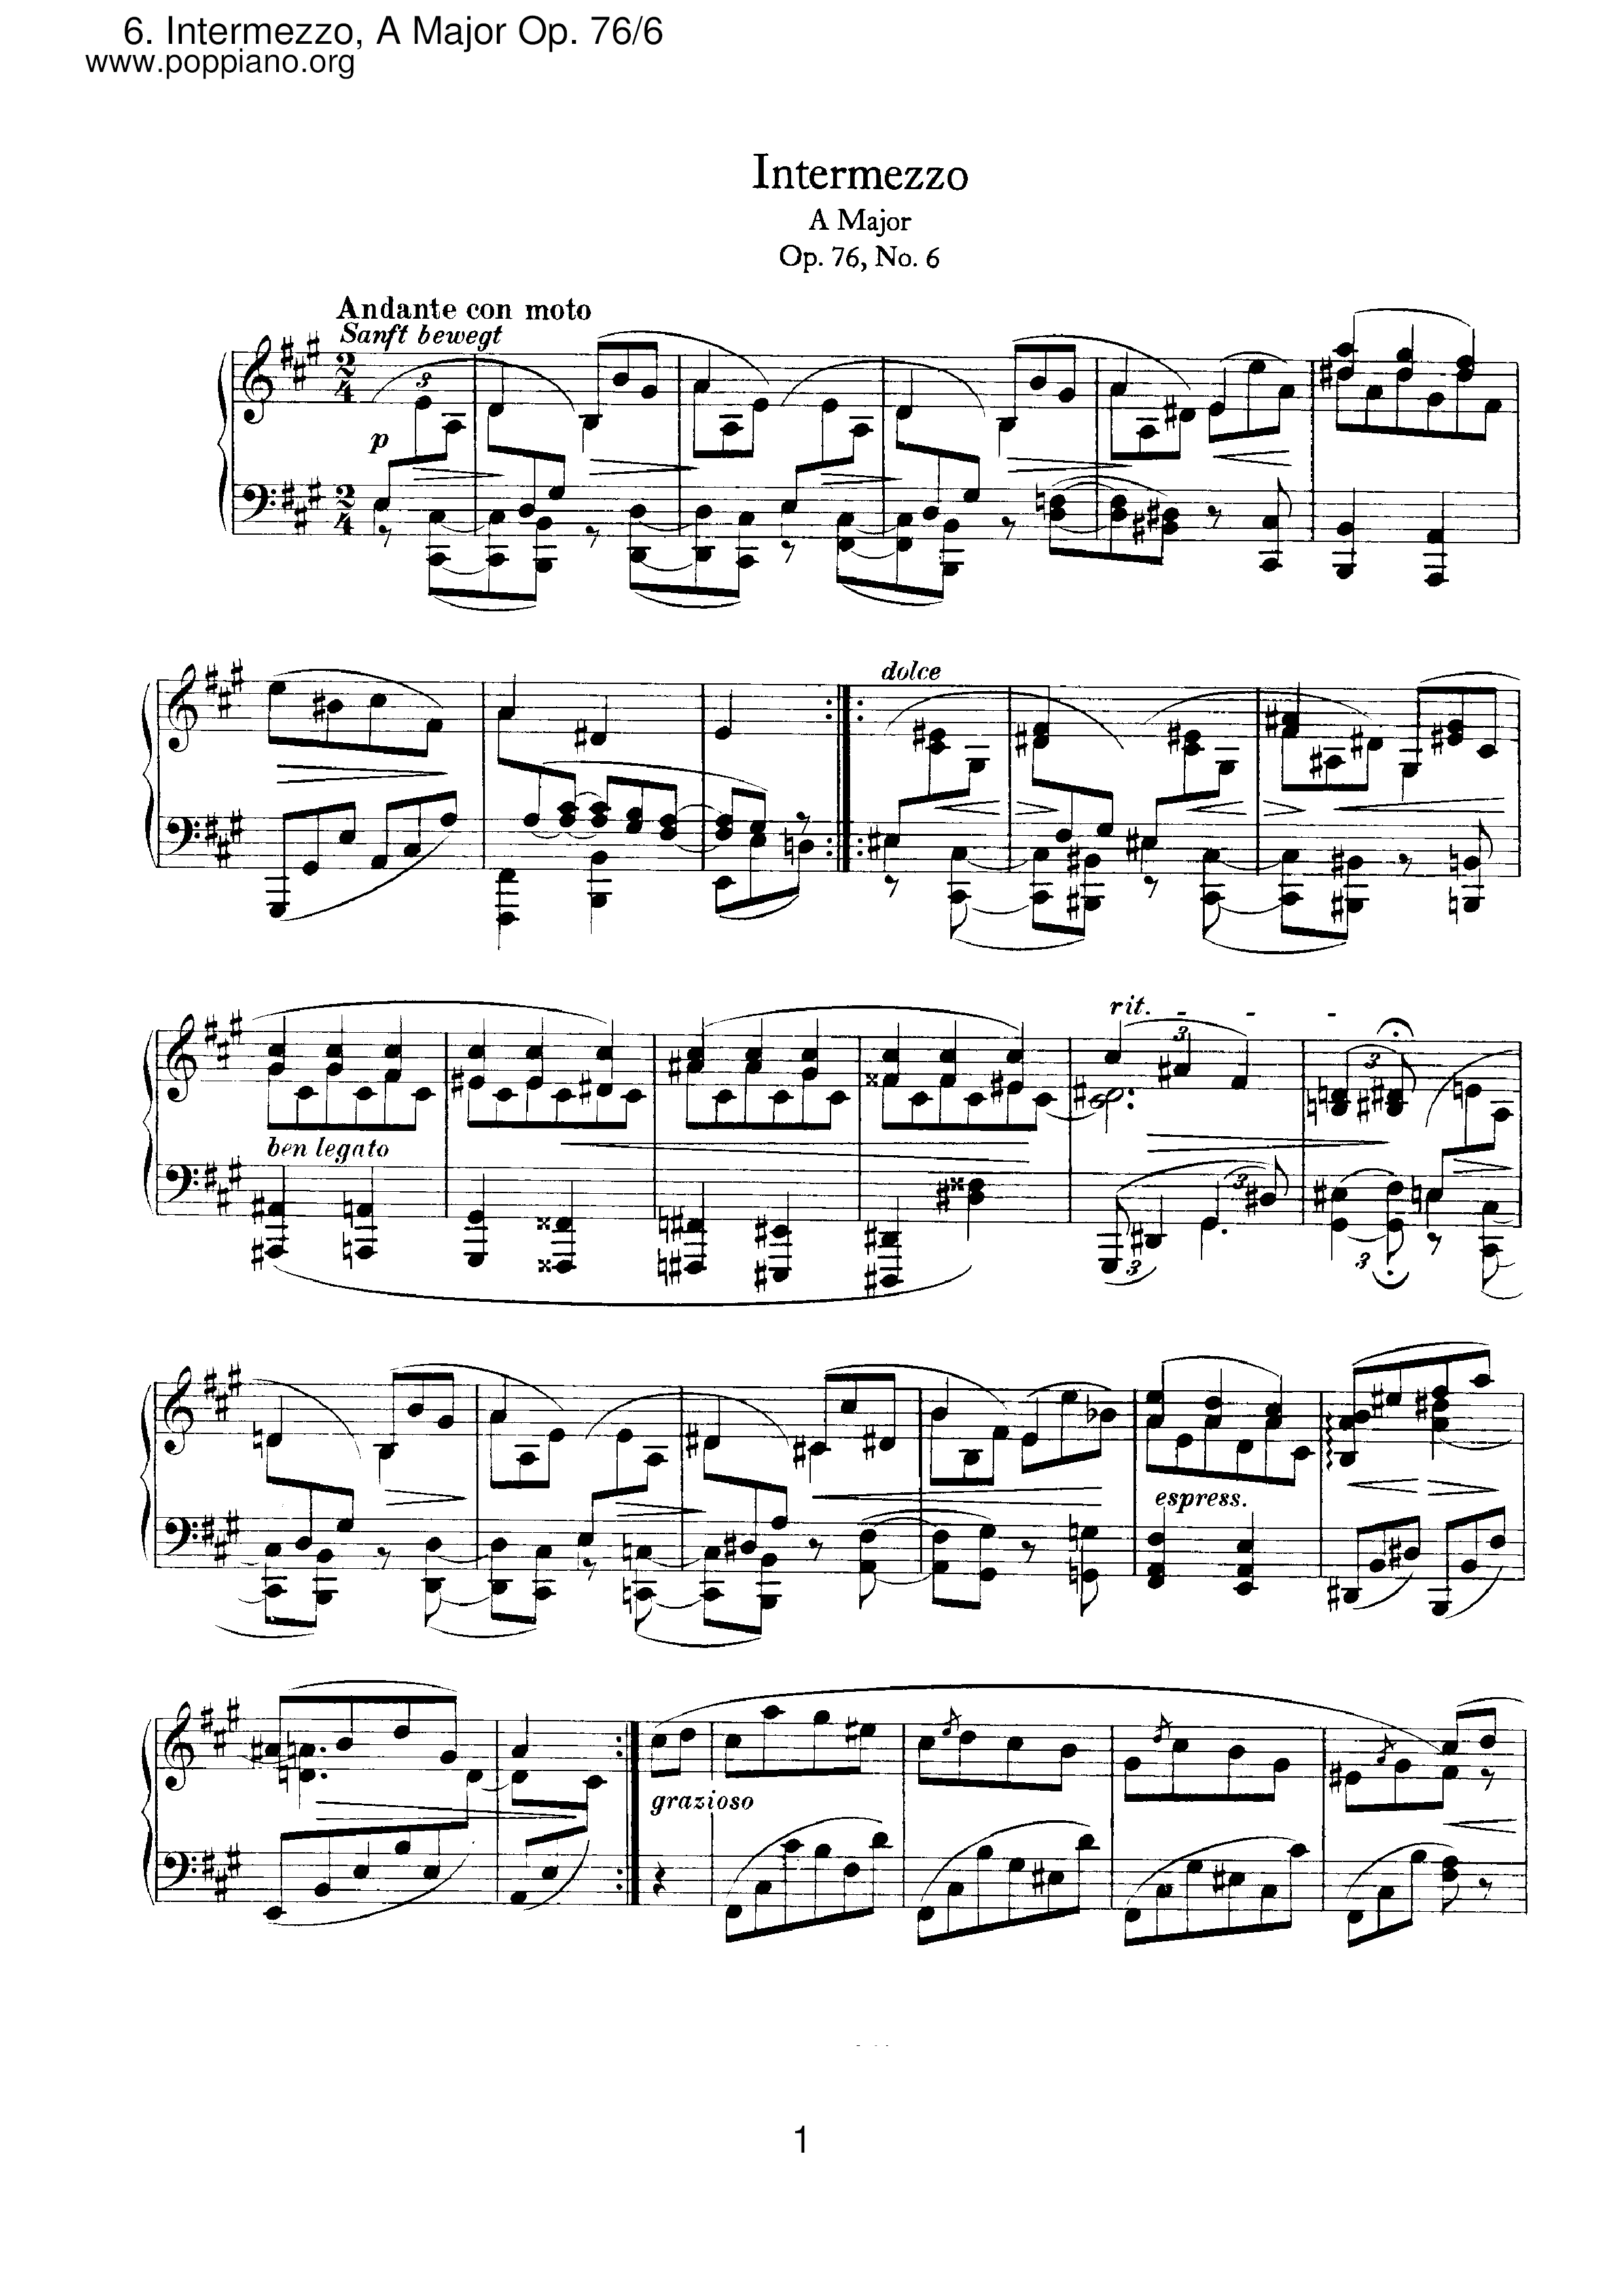 Intermezzo No. 6 in A Major, Op. 76 - Andante con moto Score